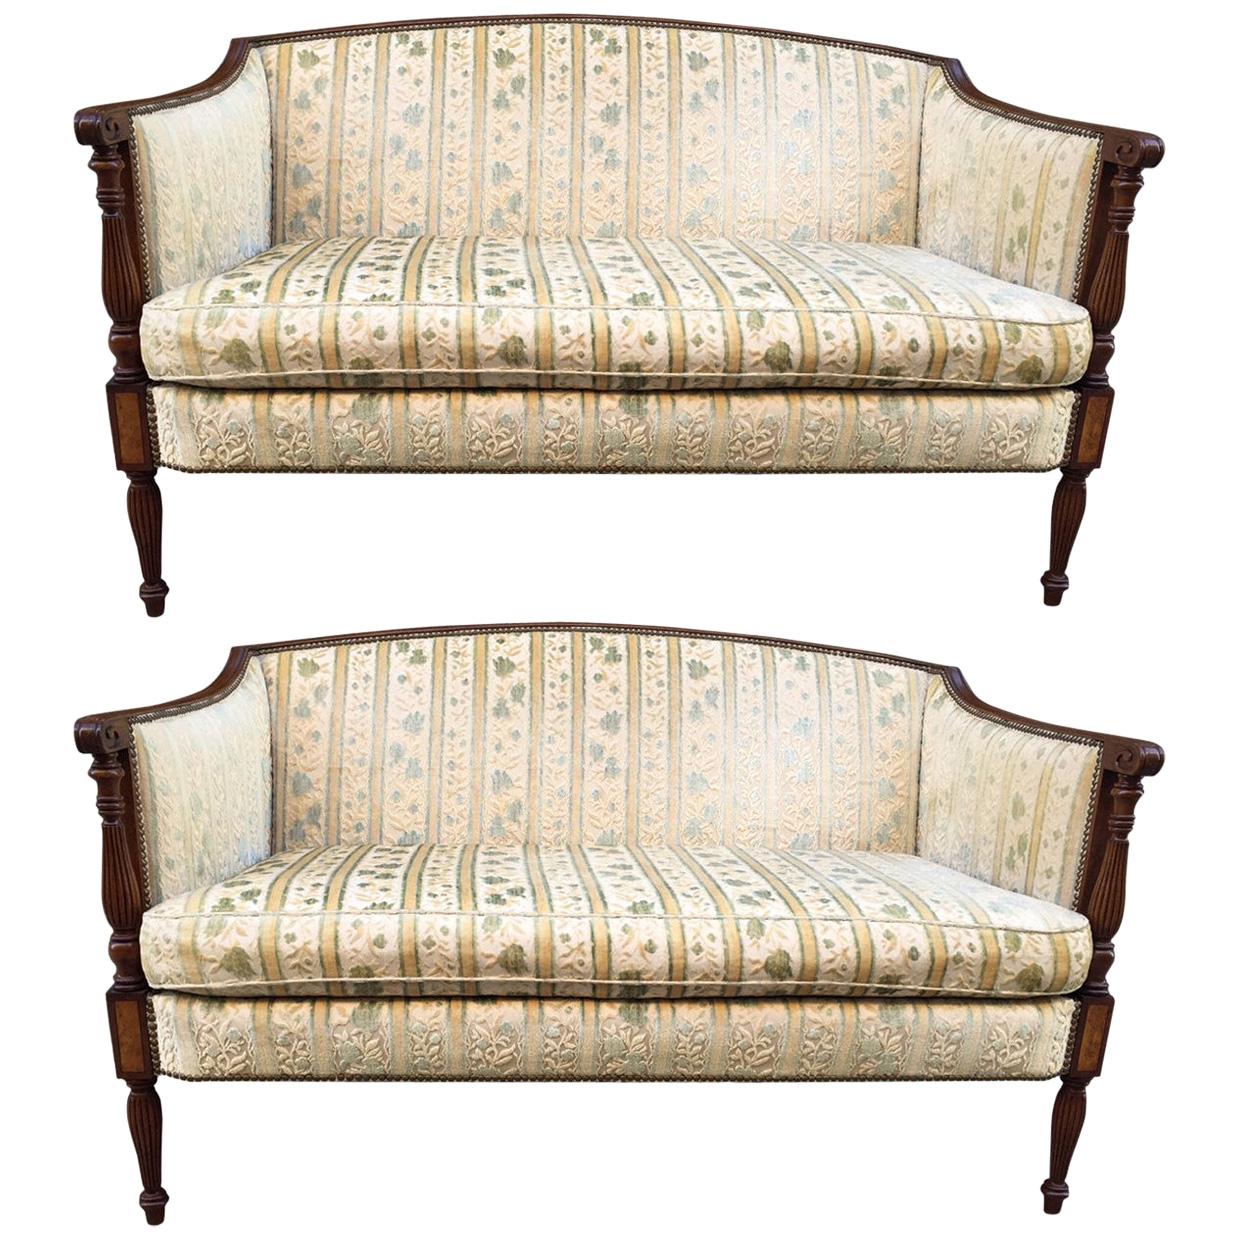 Two Regency Style Sofas